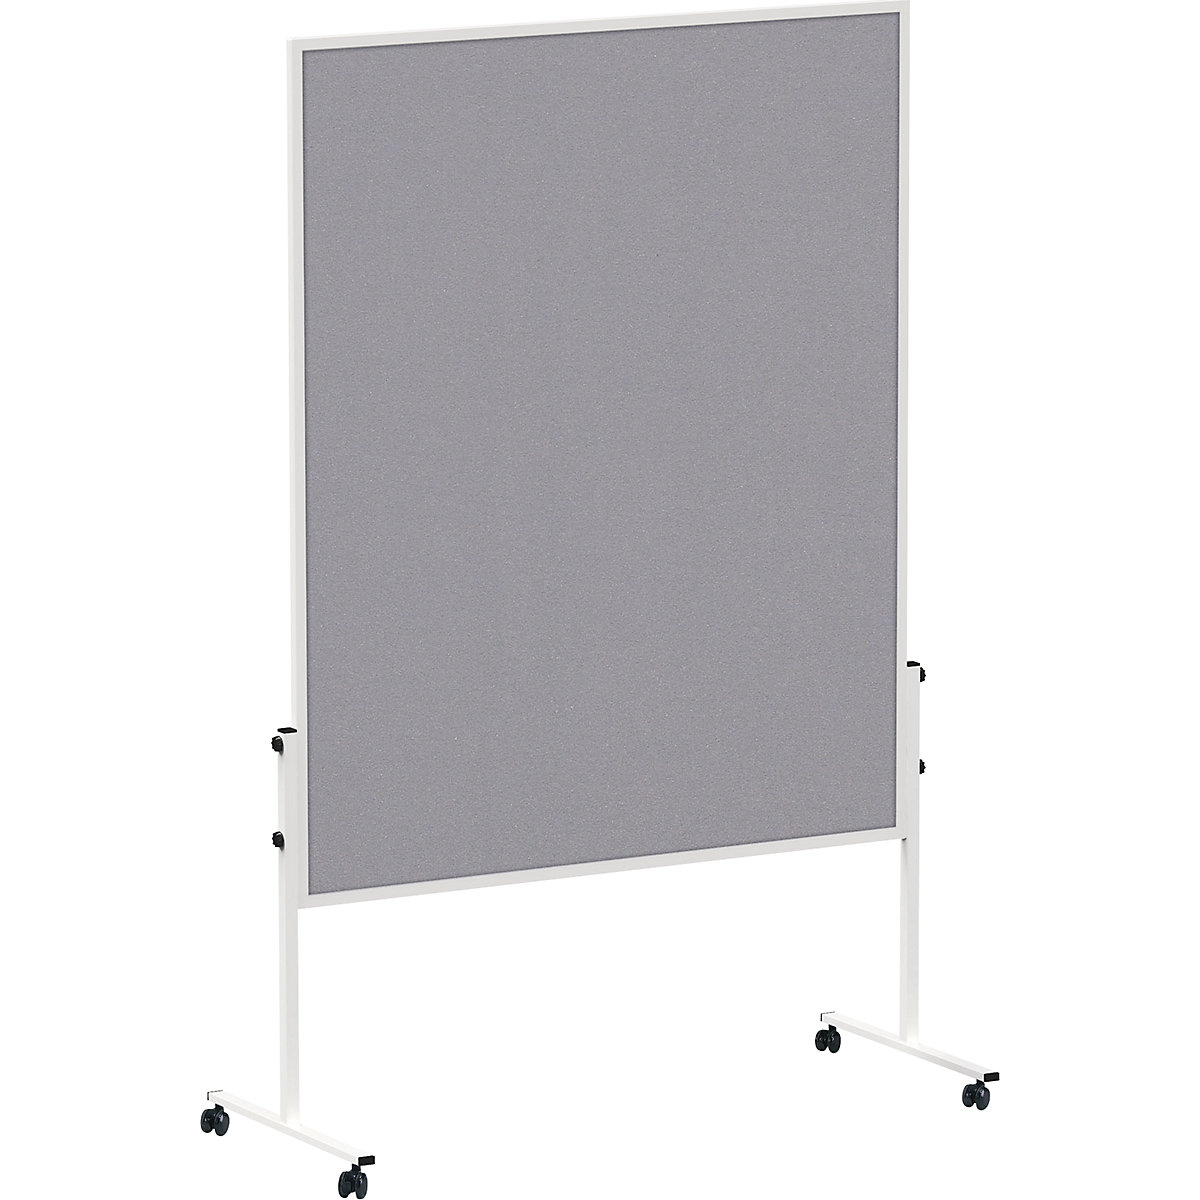 MAULsolid presentation board – MAUL, mobile, felt colour grey-4